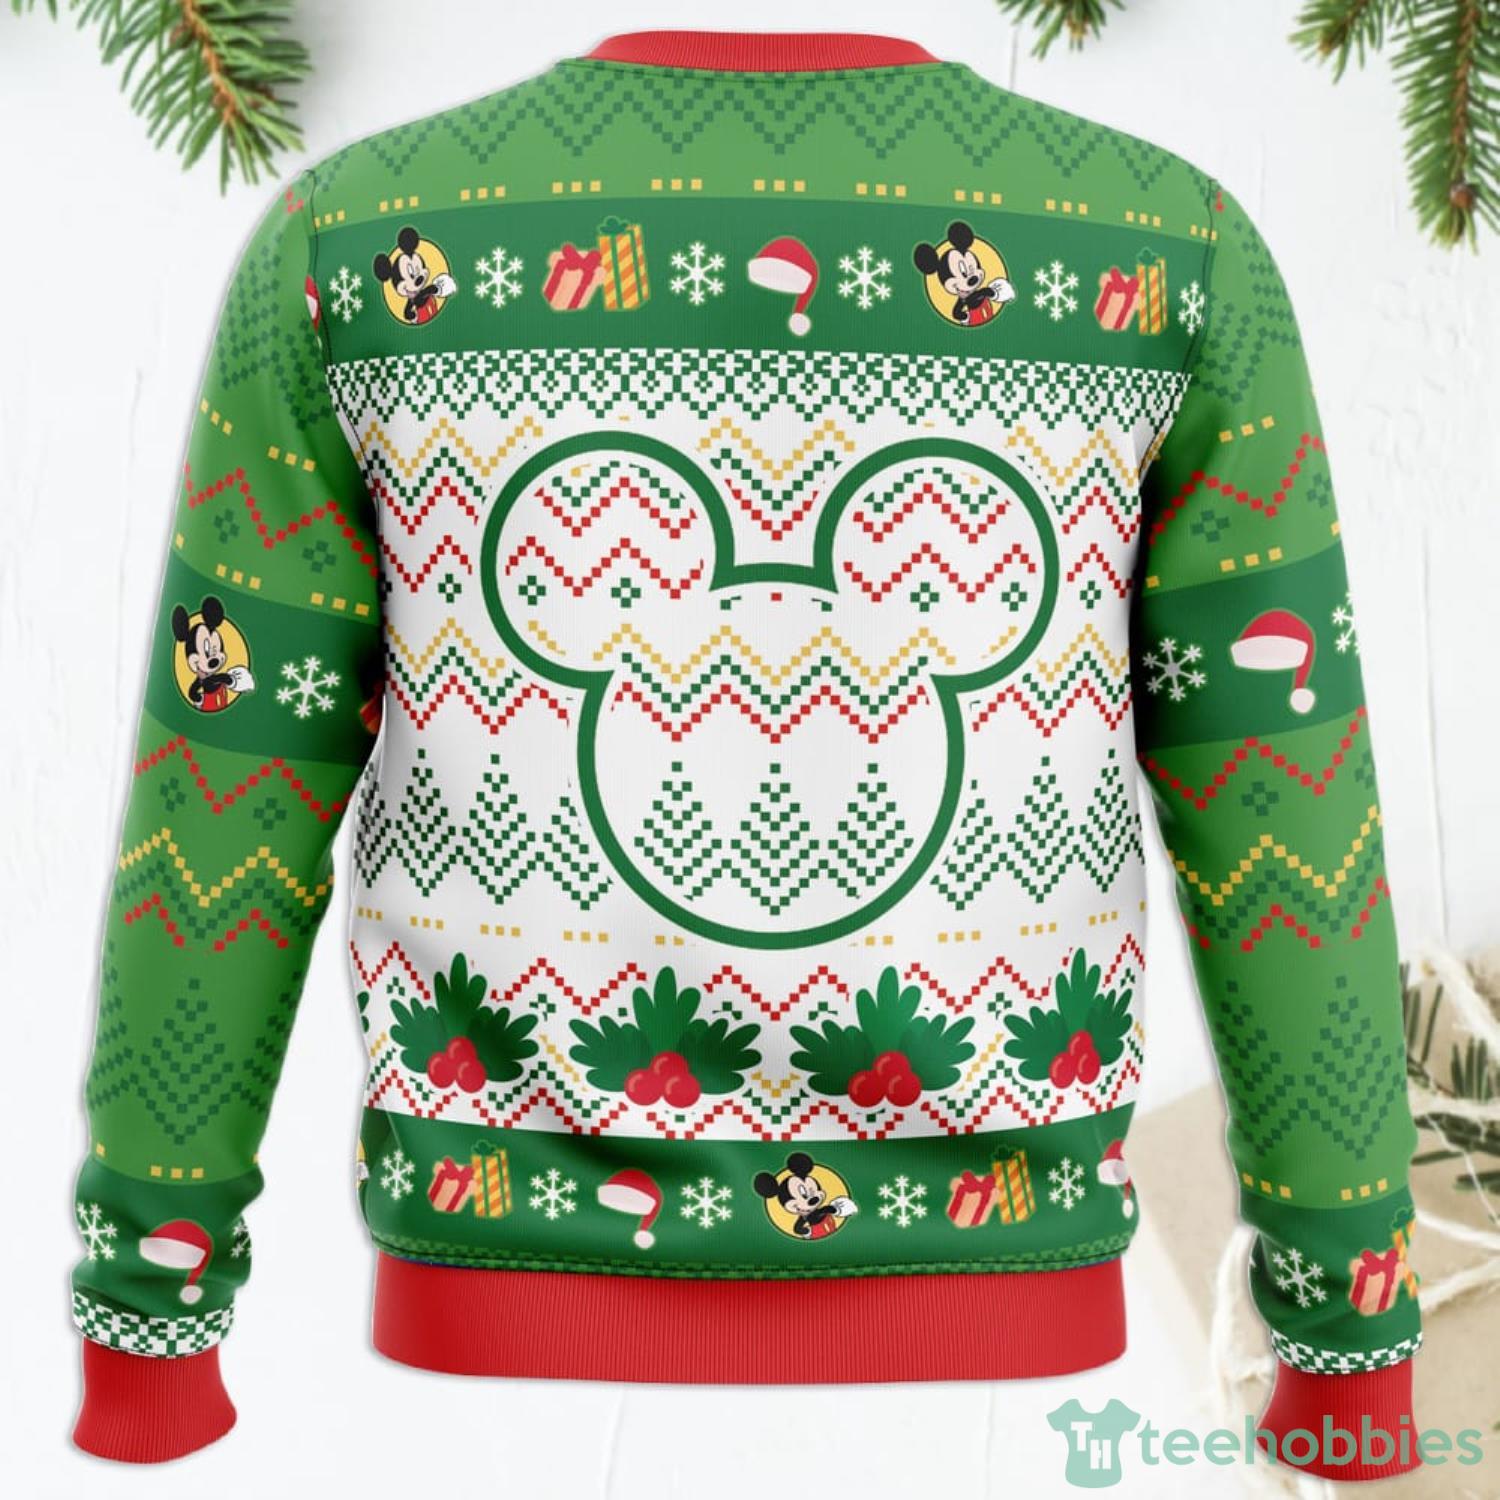 Pittsburgh Penguins Hohoho Mickey Christmas Ugly Sweater - Jomagift